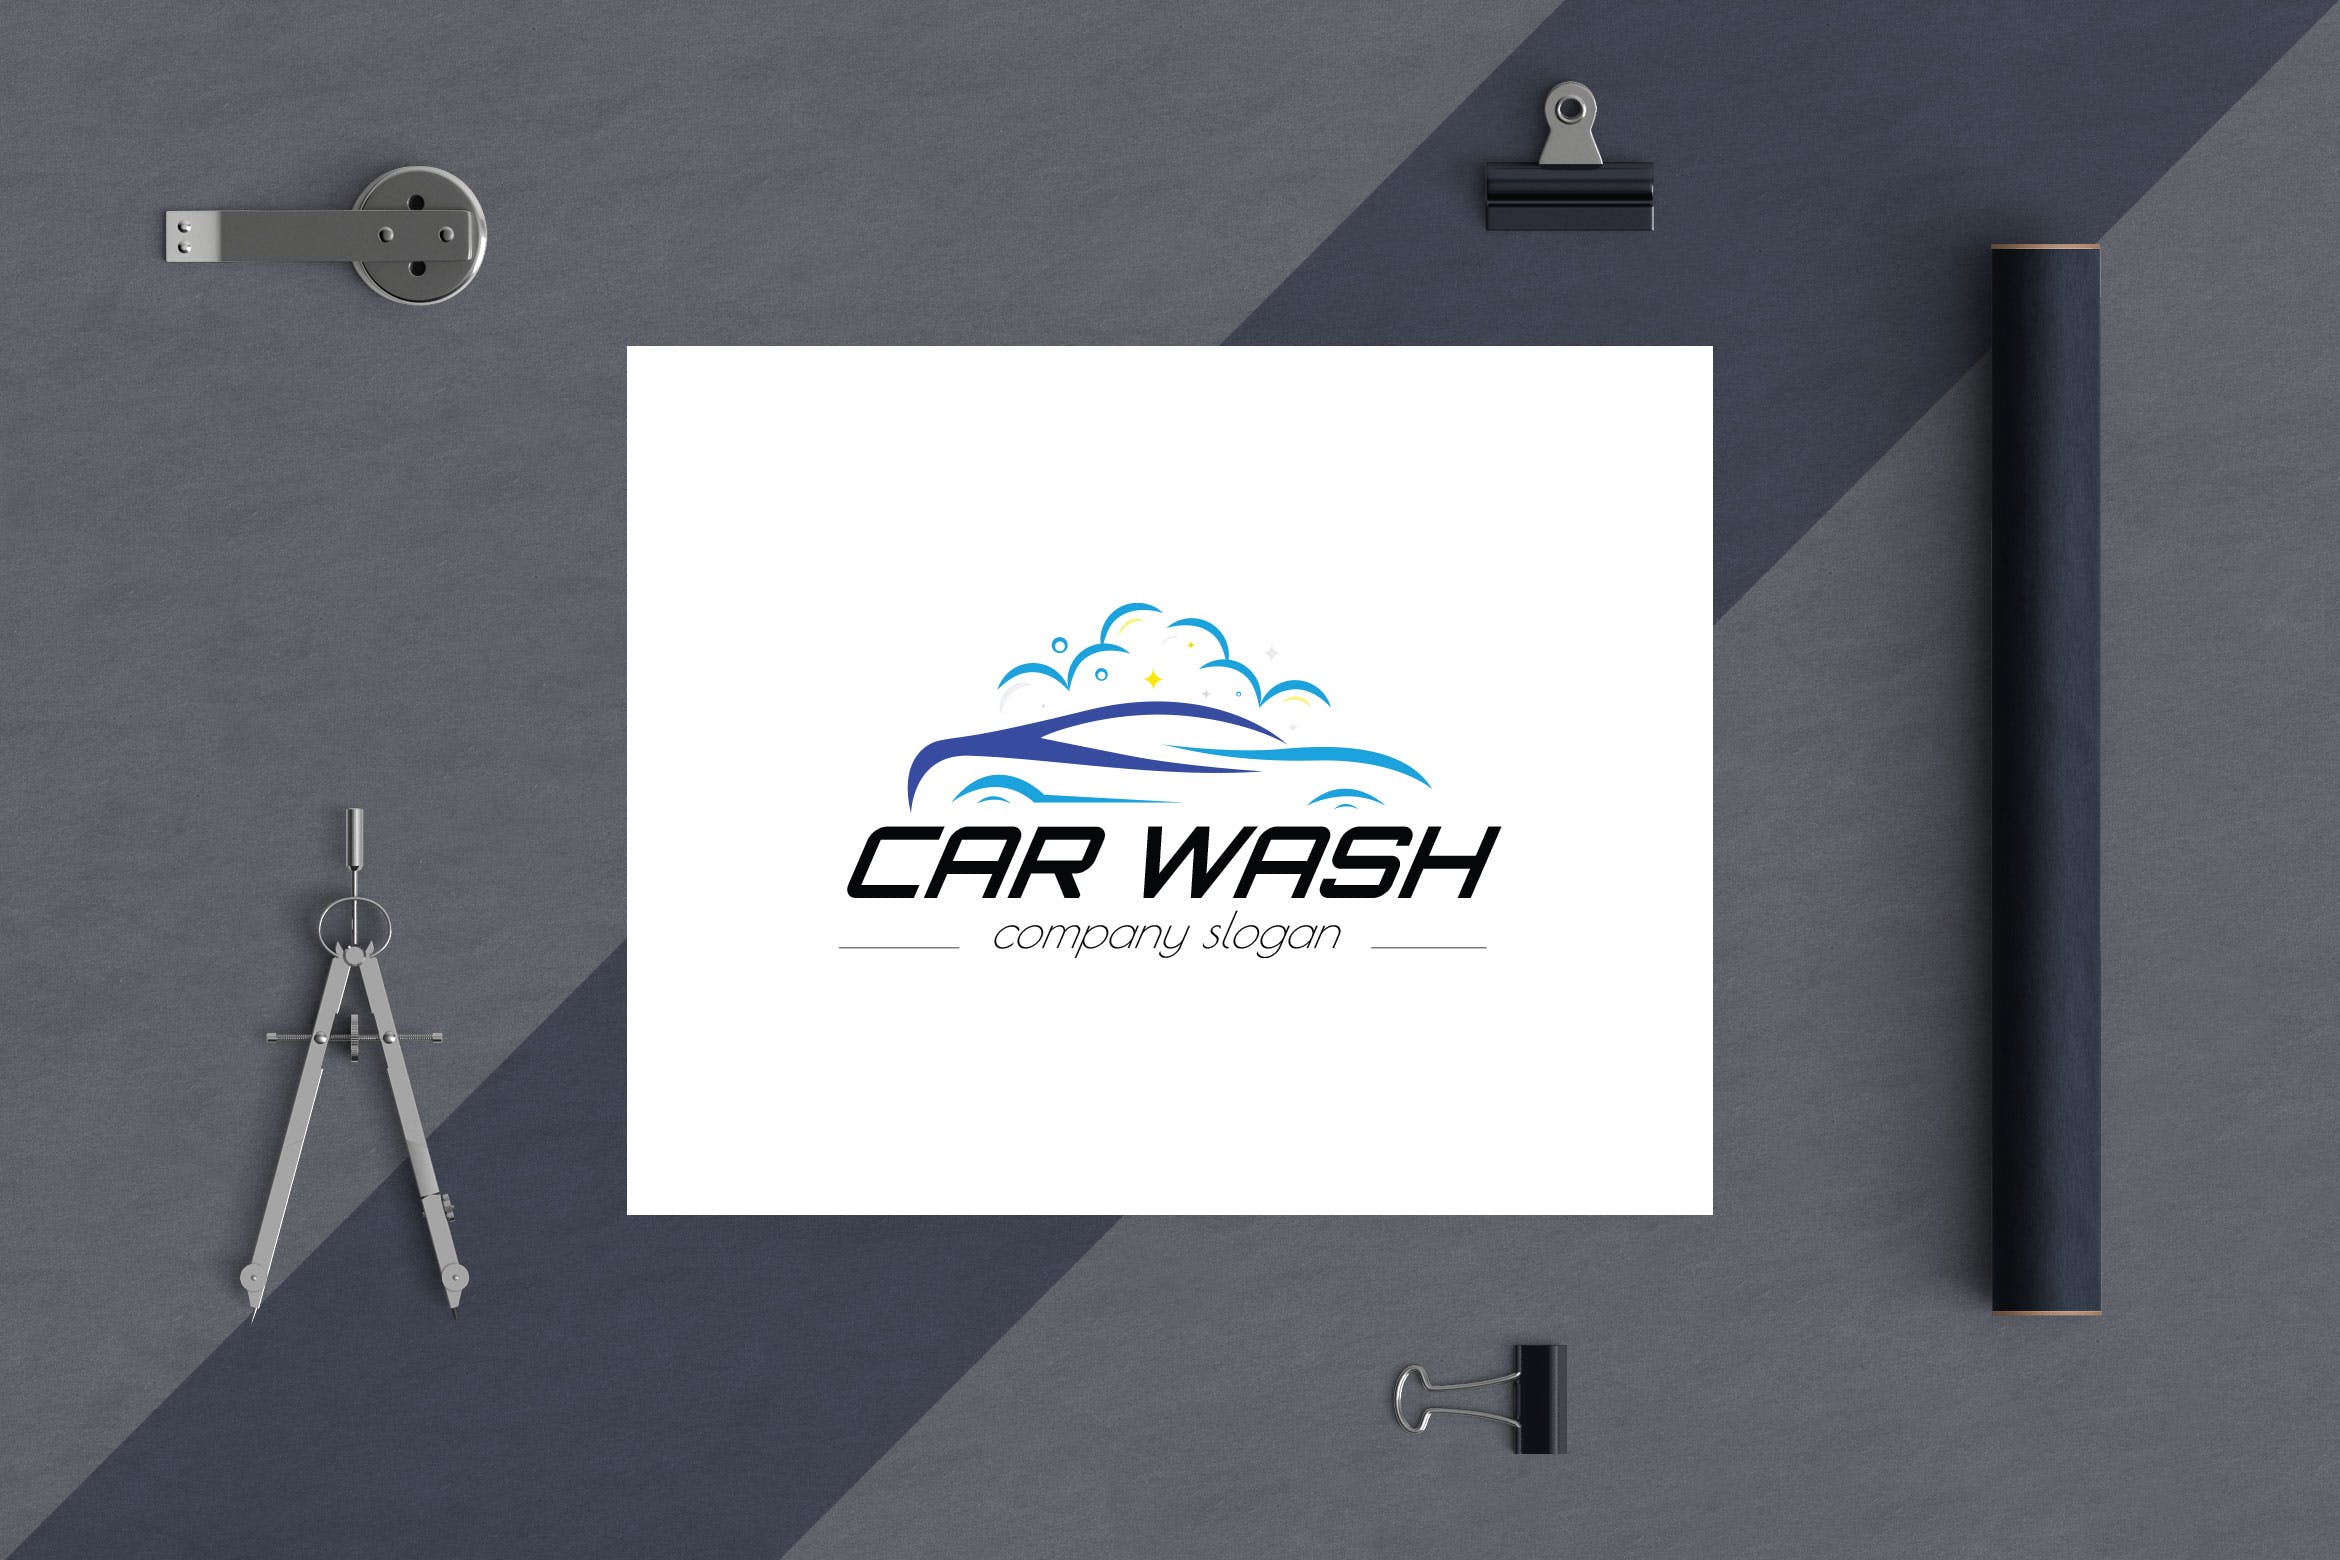 洗车店品牌Logo设计16图库精选模板 Car Wash Business Logo Template插图